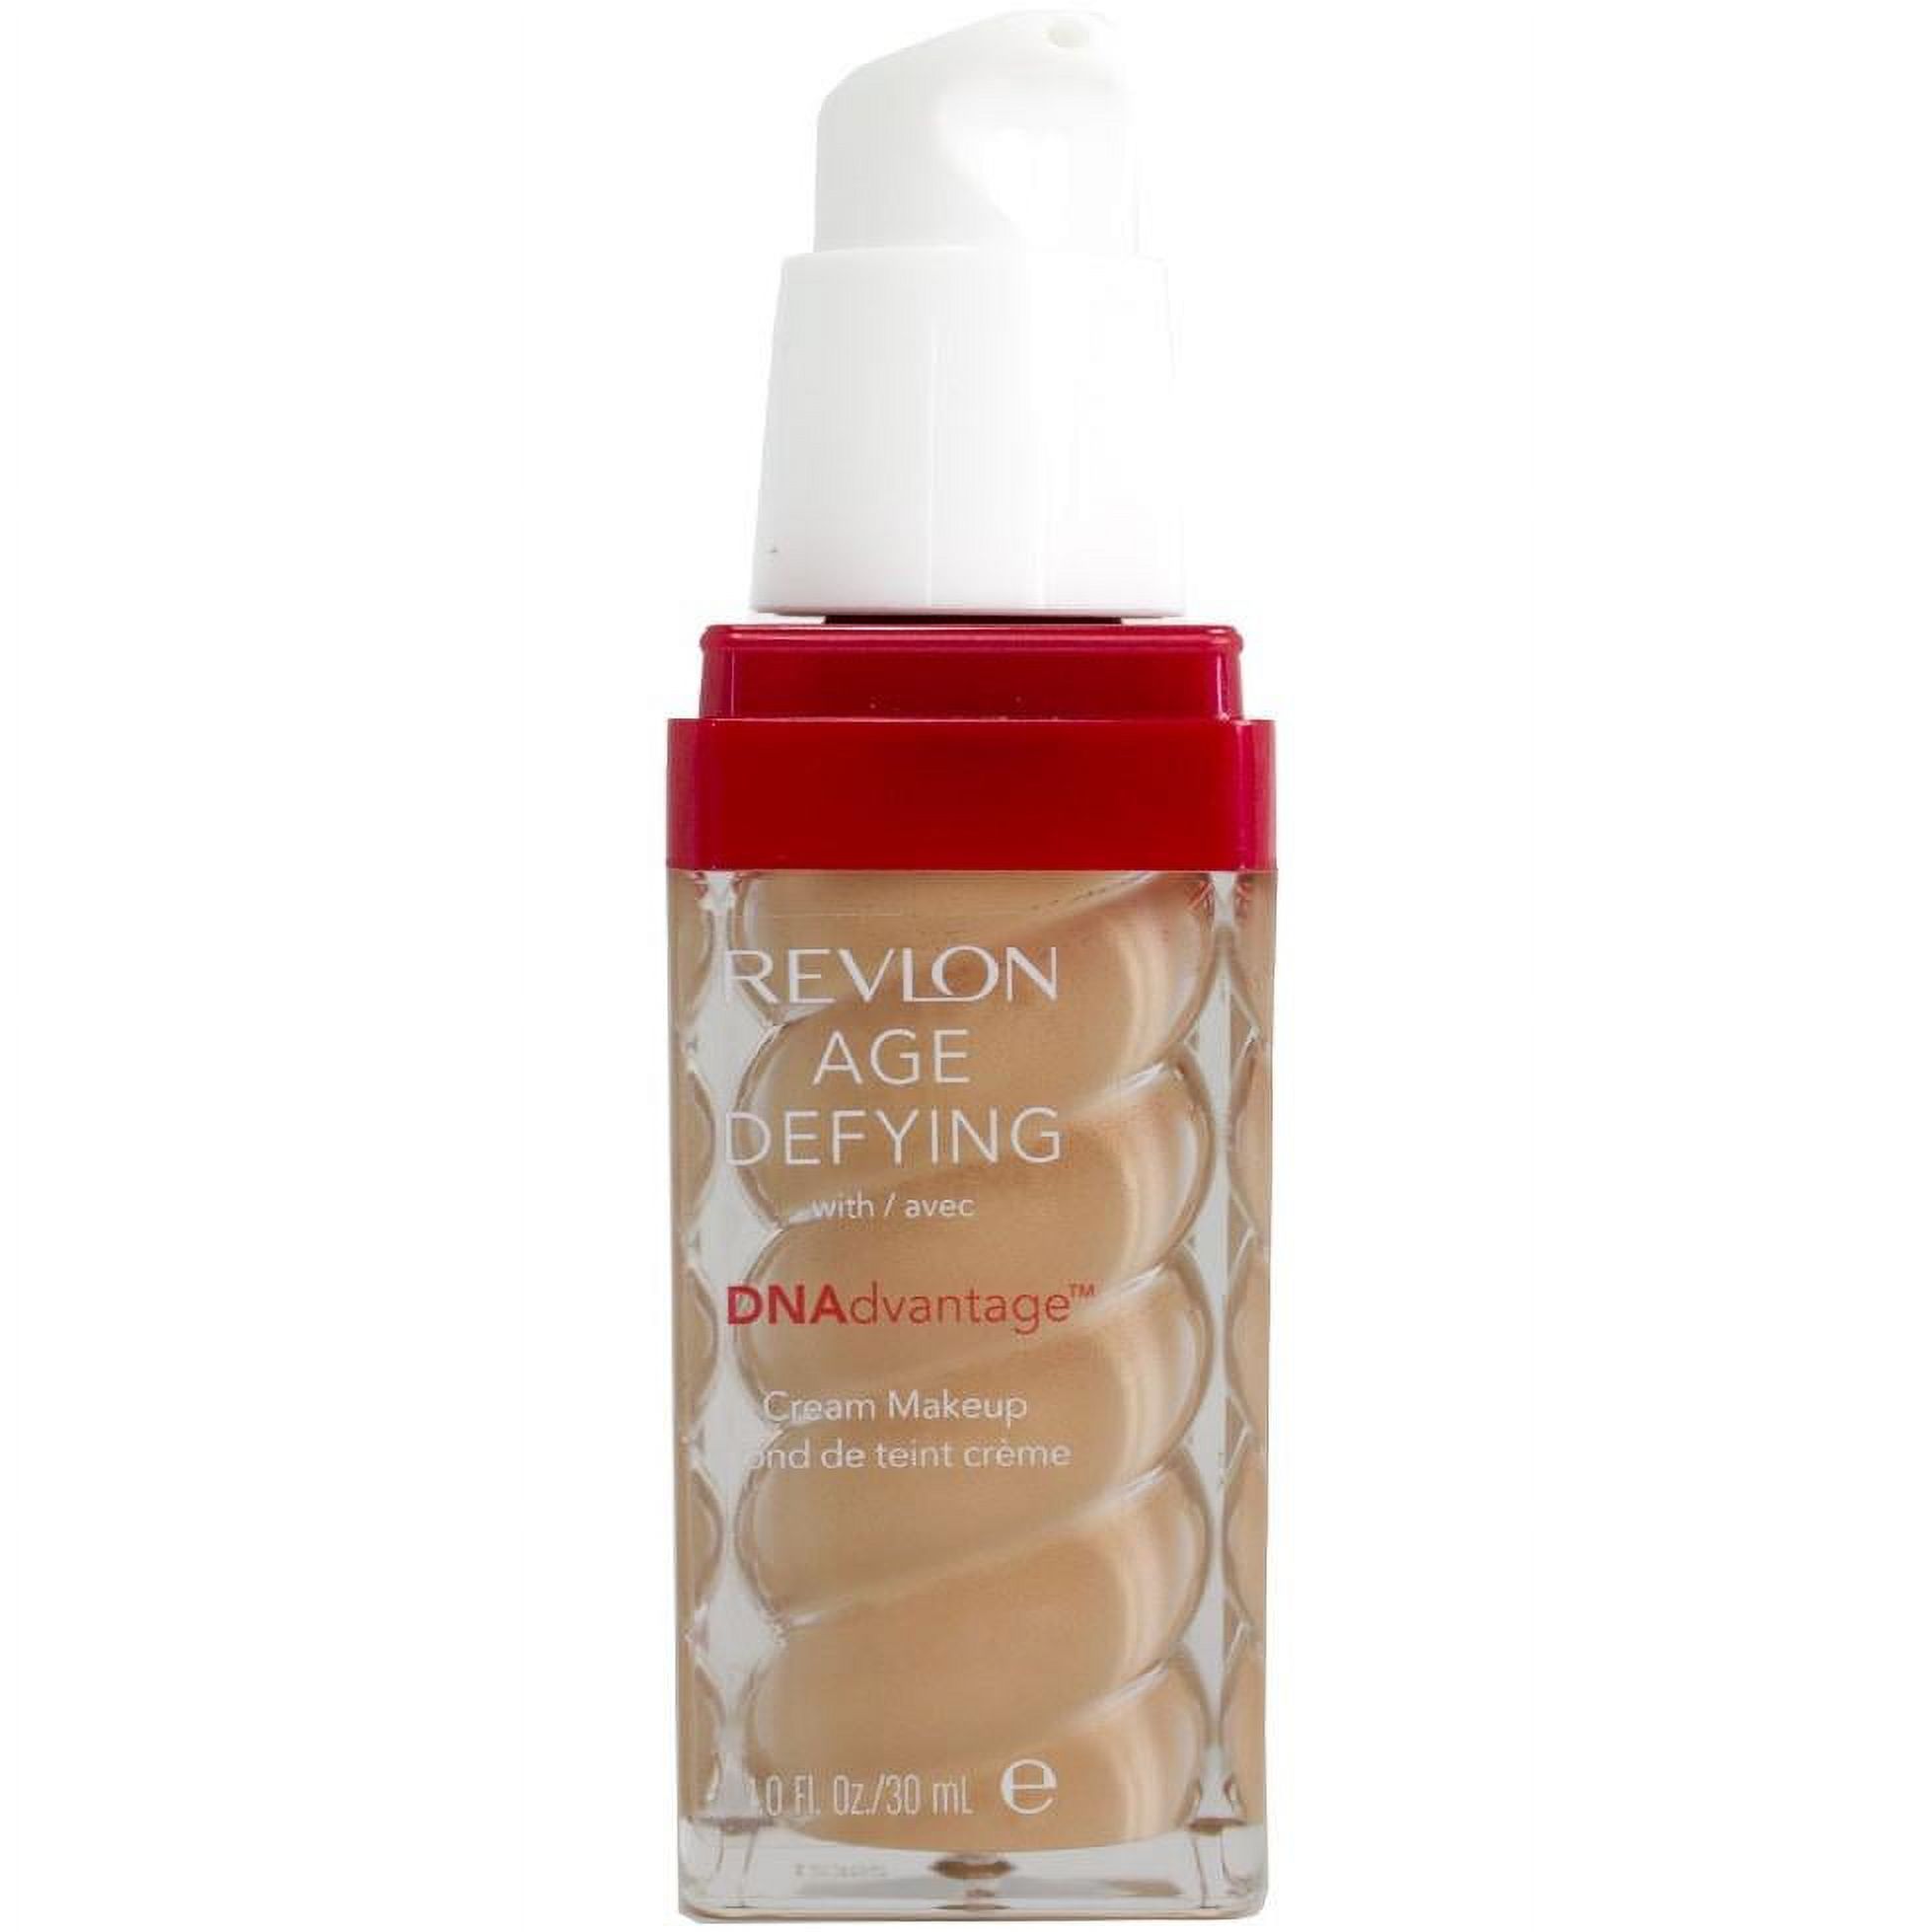 Revlon Age Defying with DNA Advantage Cream Makeup, 05 Fresh Ivory, 1 fl oz - image 4 of 12